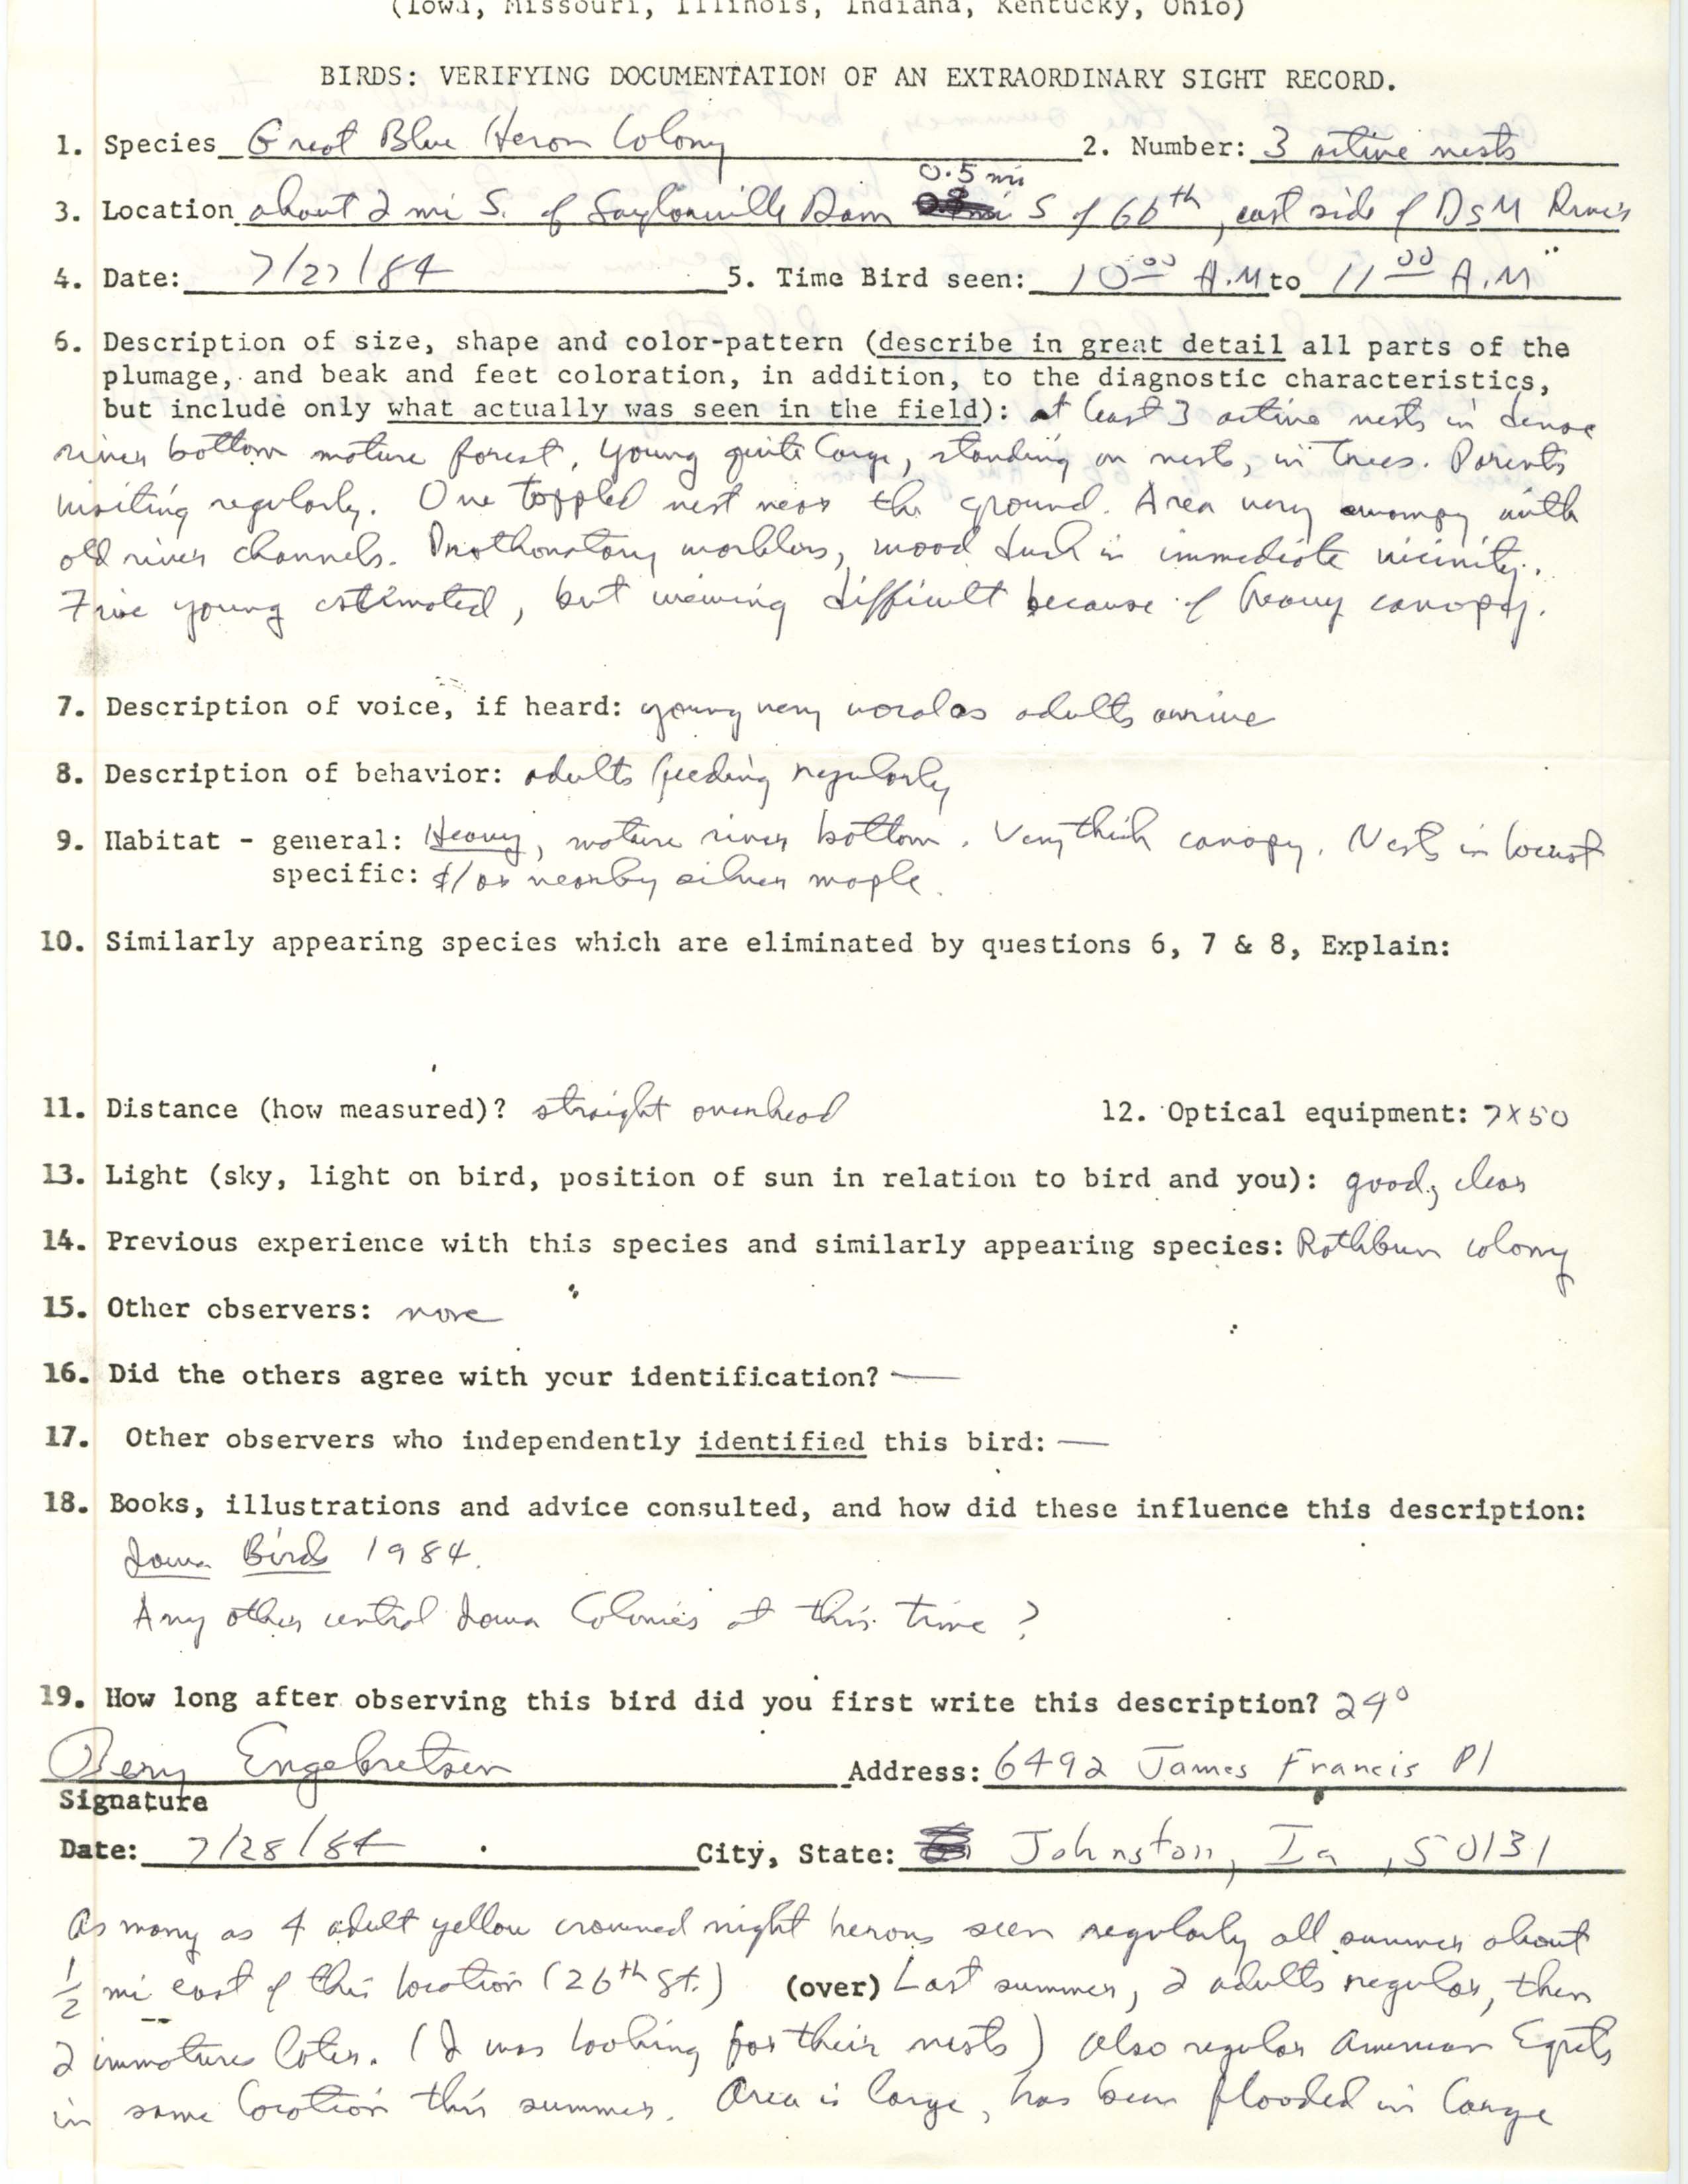 Rare bird documentation form for Great Blue Heron at Saylorville Dam, 1984